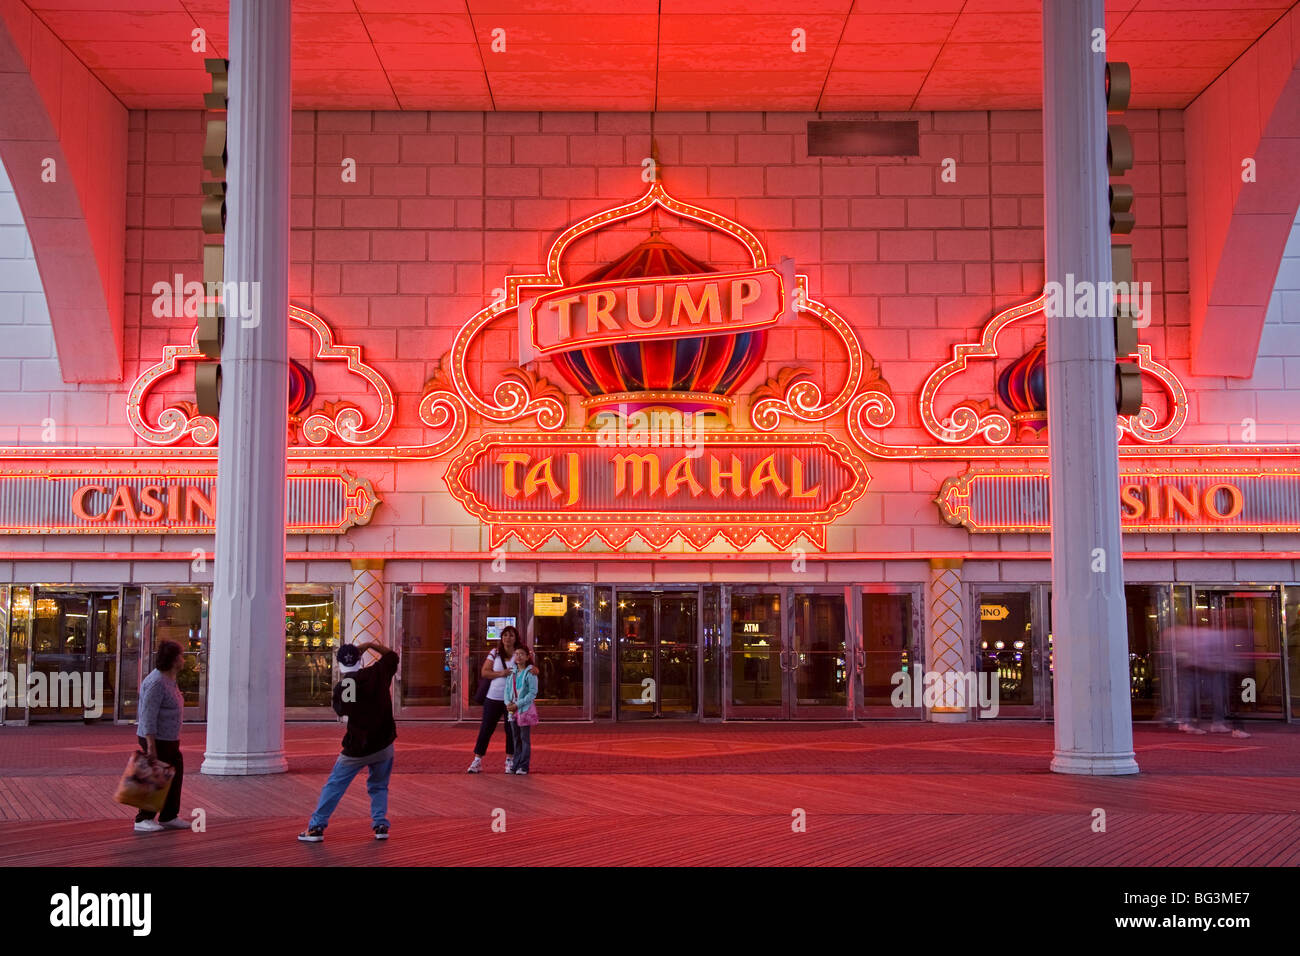 Trump Taj Mahal Casino, Atlantic City, New Jersey, United States of America, North America Stock Photo